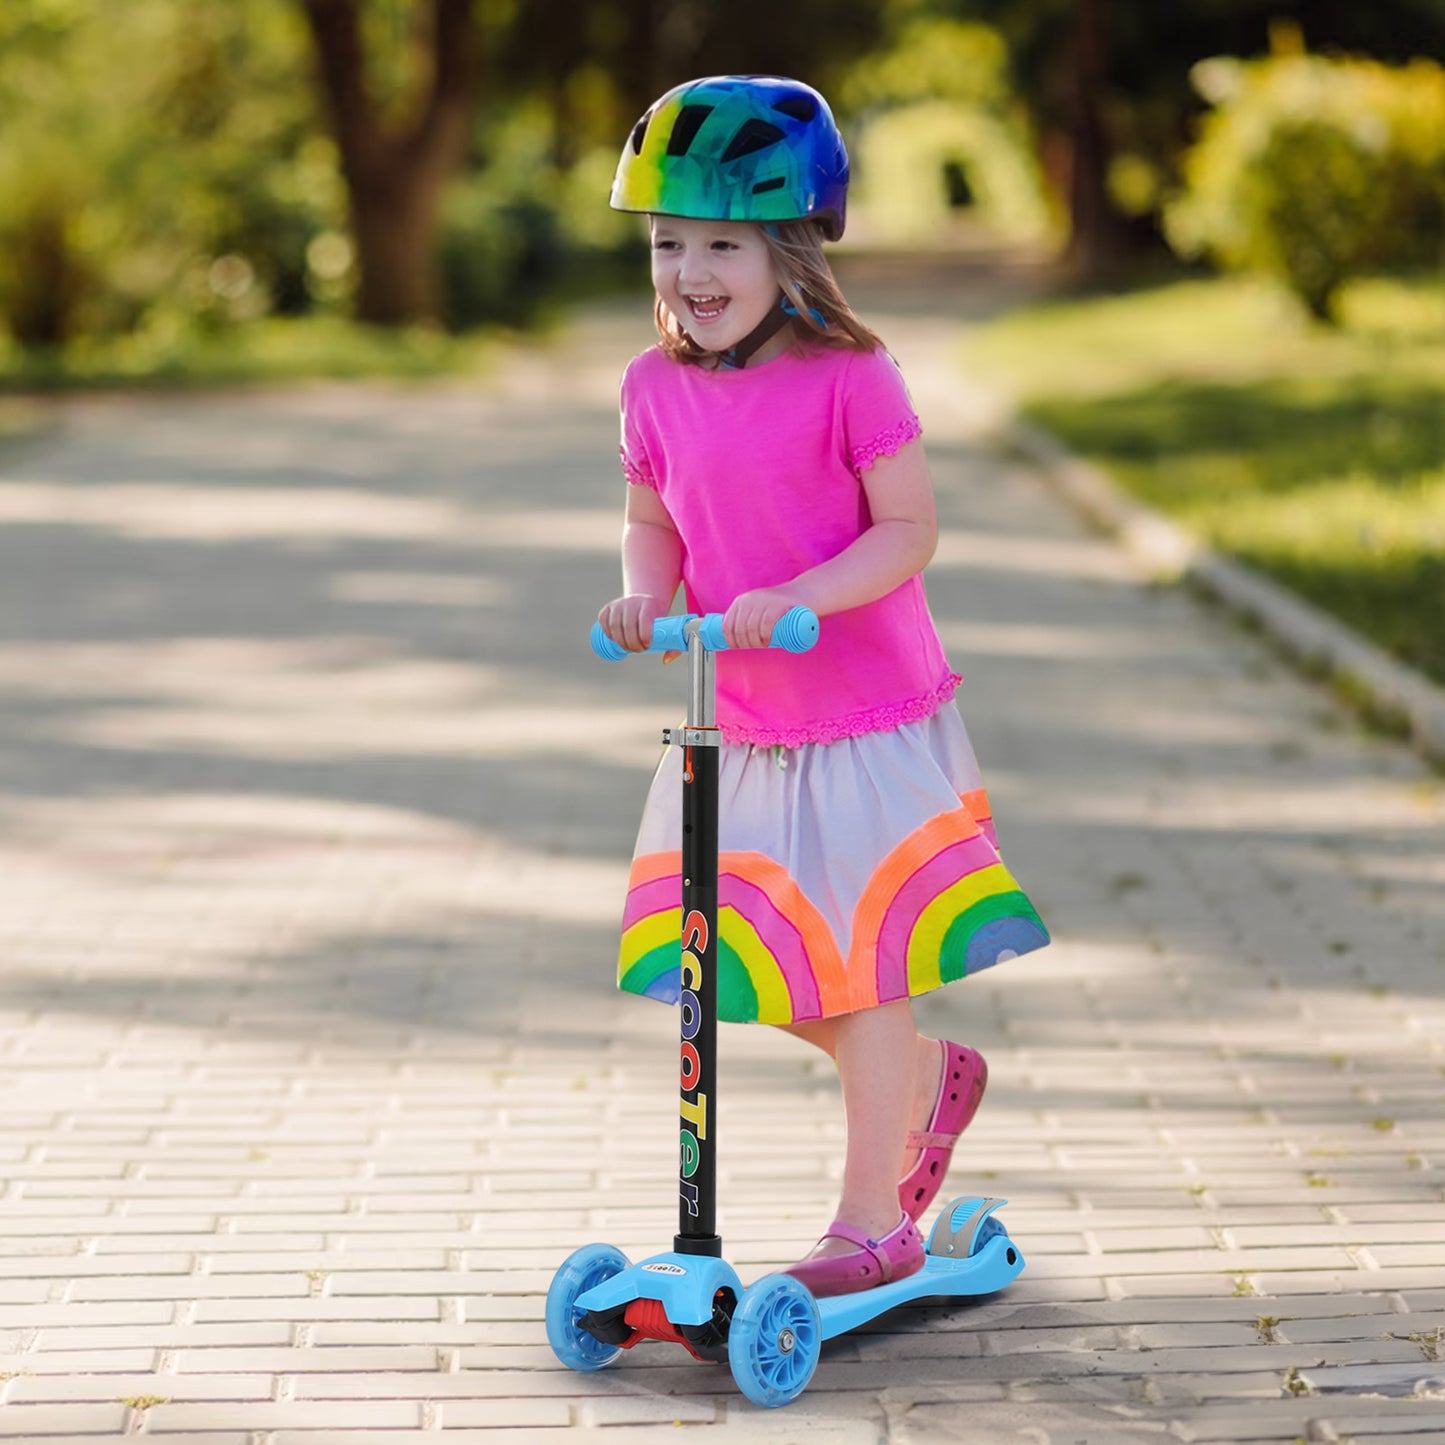 Kids Kick Scooter - 3 LED Wheels - Adjustable Height Handlebar